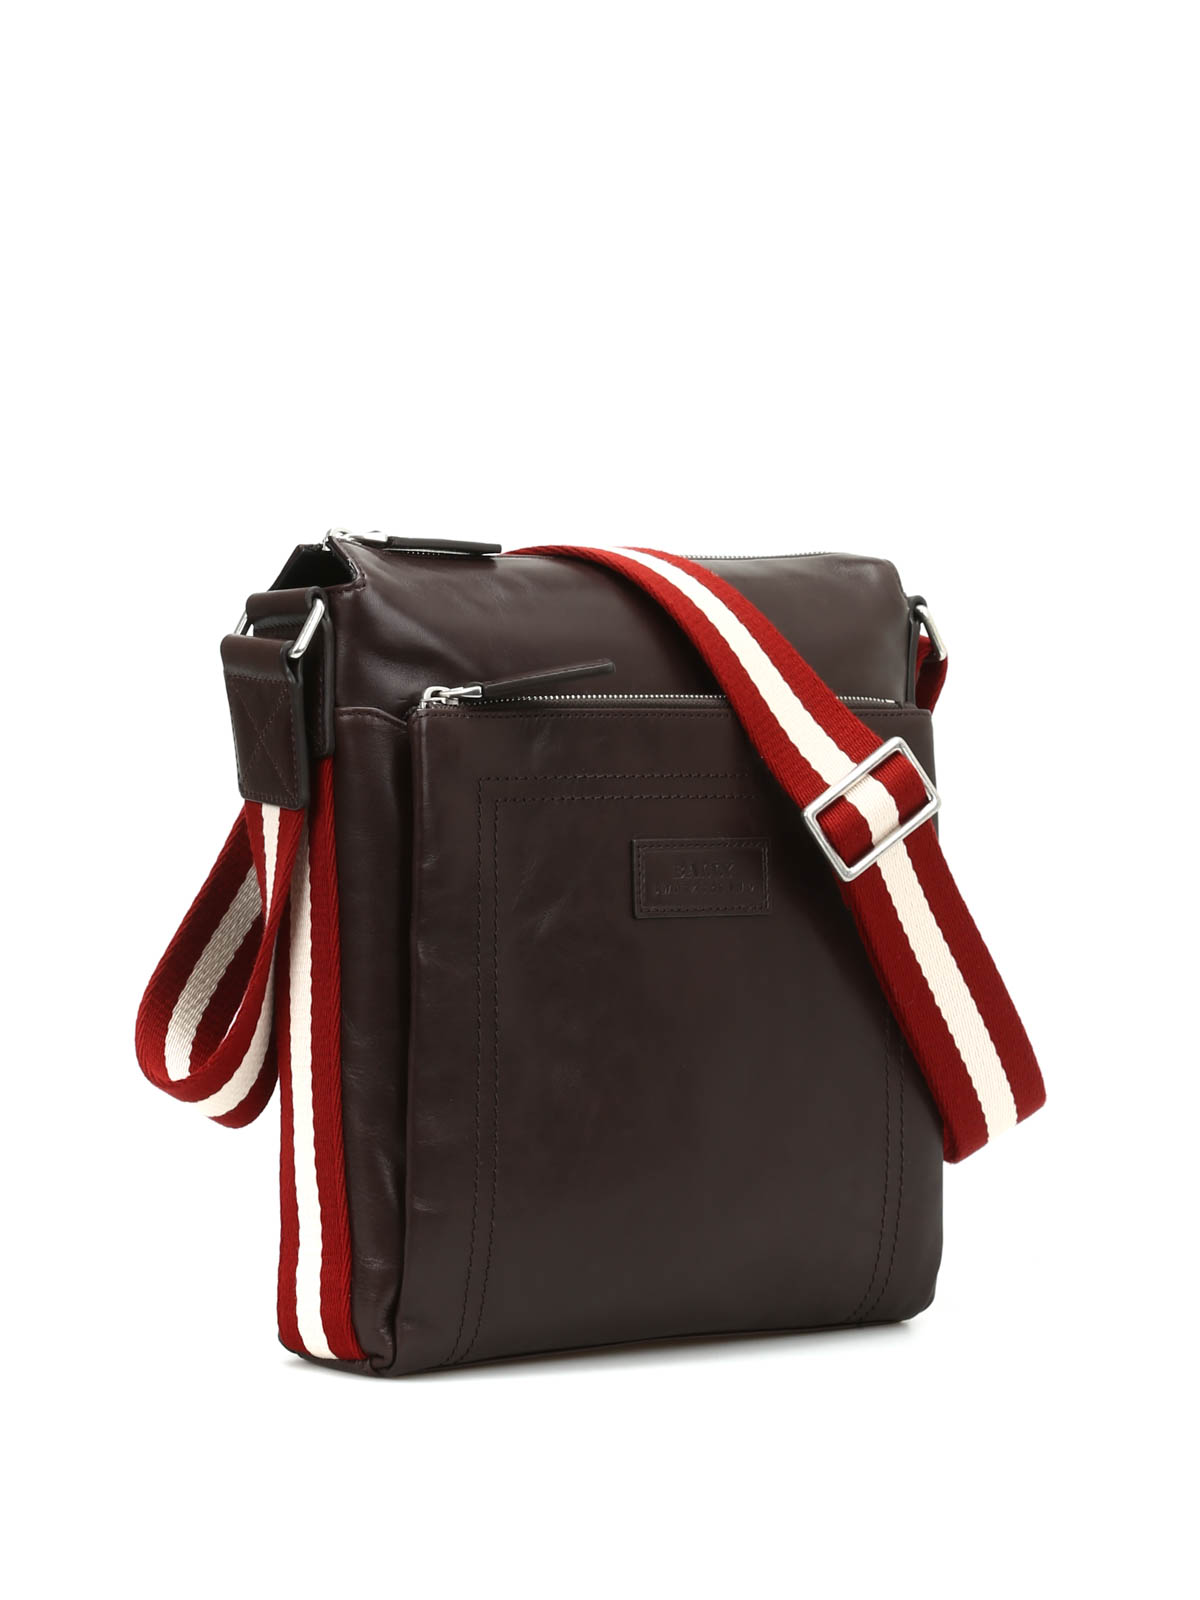 Bally Brown Leather Messenger Bag | danielaboltres.de